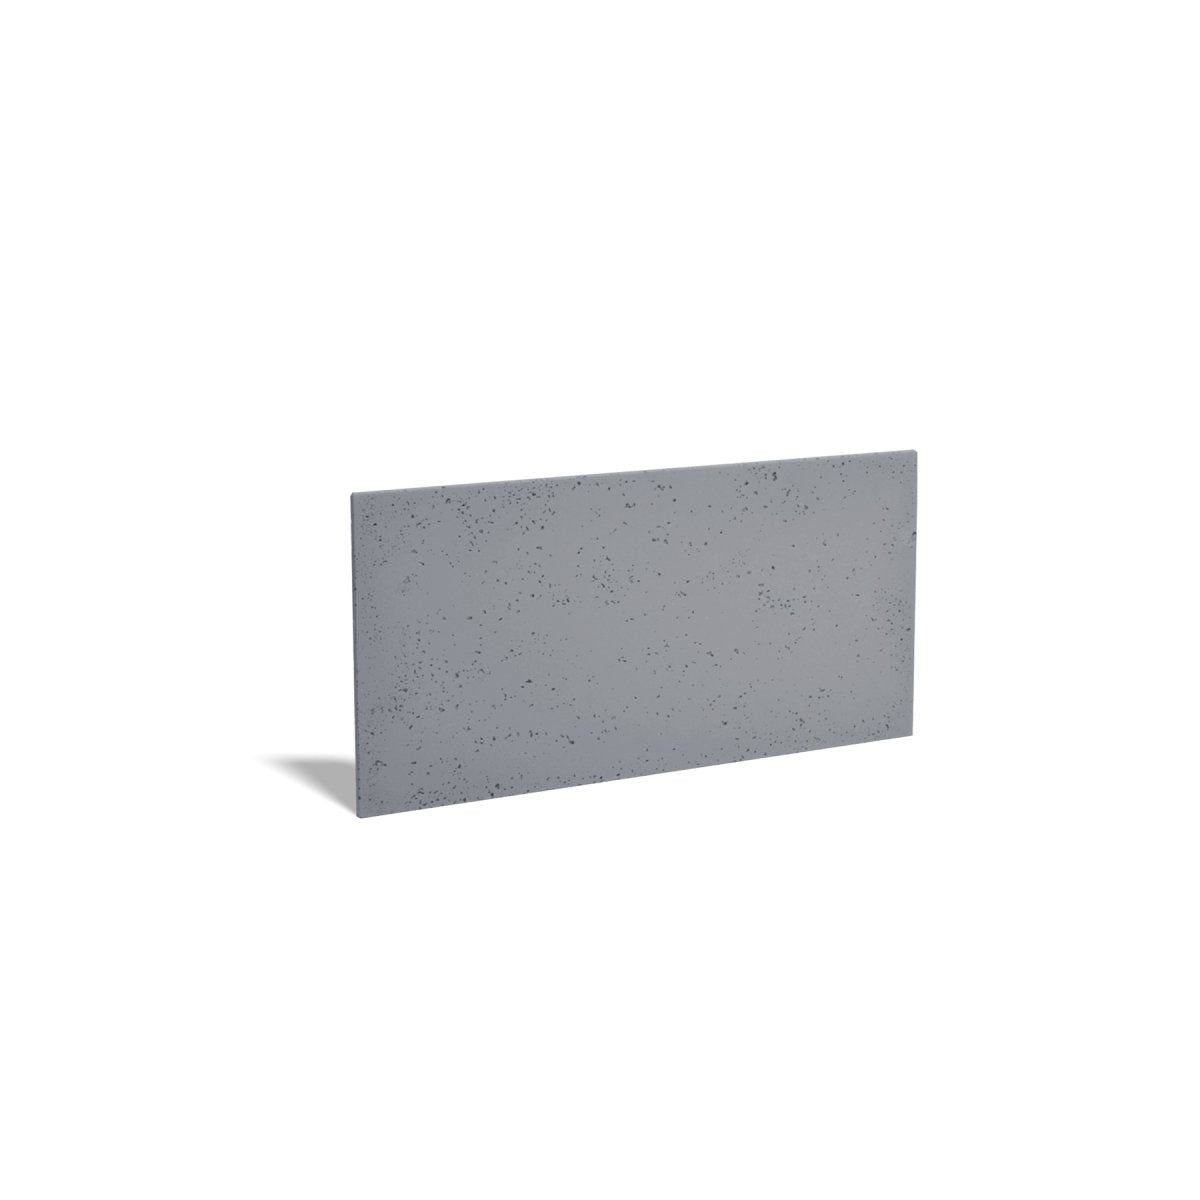 Concrete Wall Panel EXTERIOR - 60 x 30 cm - DecorMania.eu